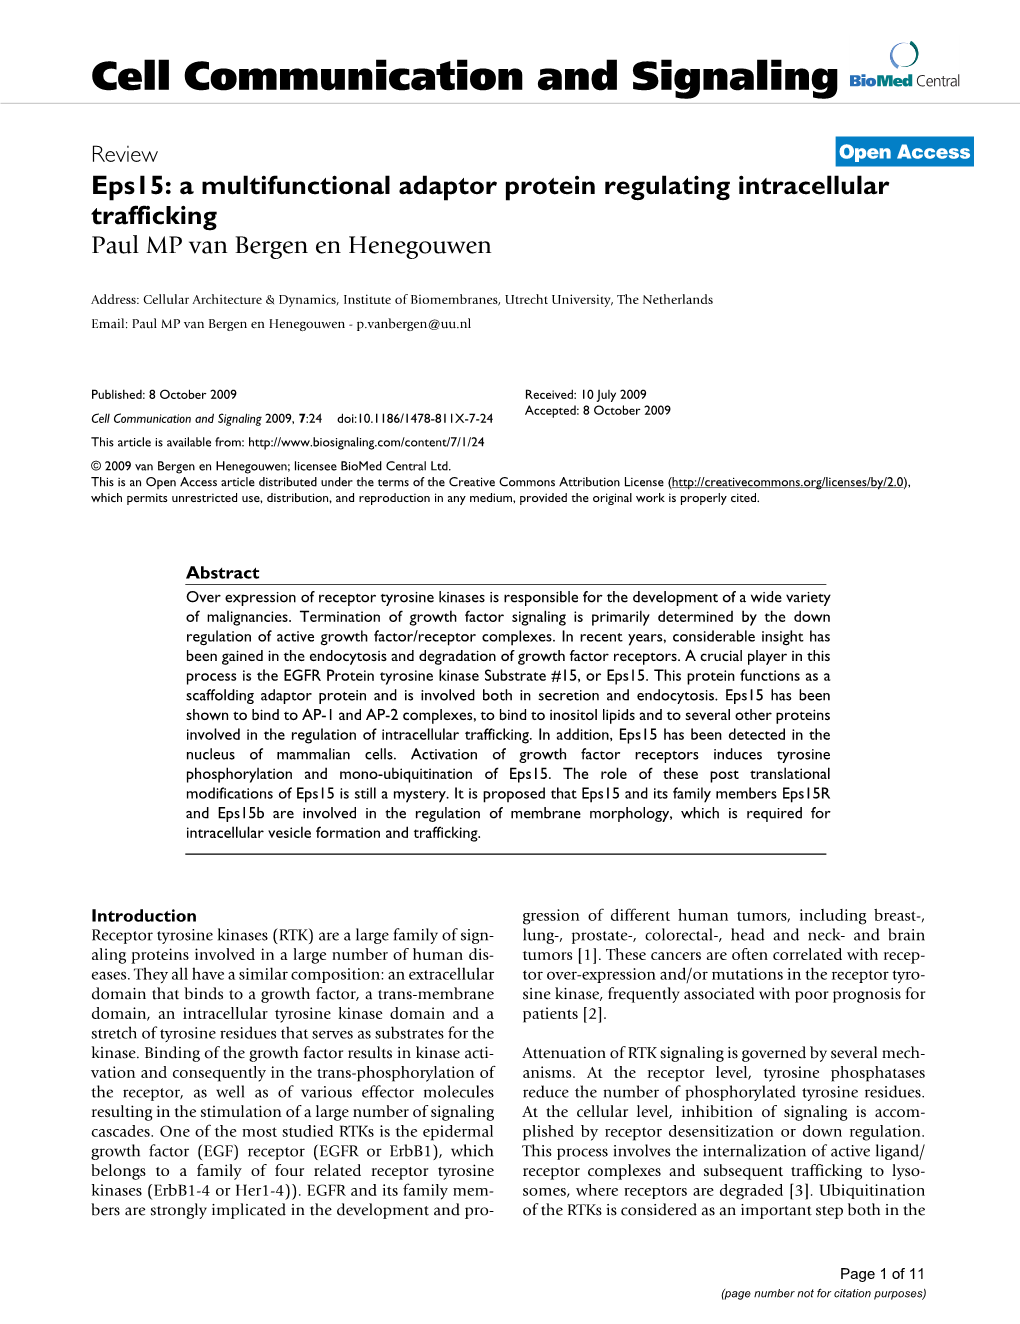 Eps15: a Multifunctional Adaptor Protein Regulating Intracellular Trafficking Paul MP Van Bergen En Henegouwen